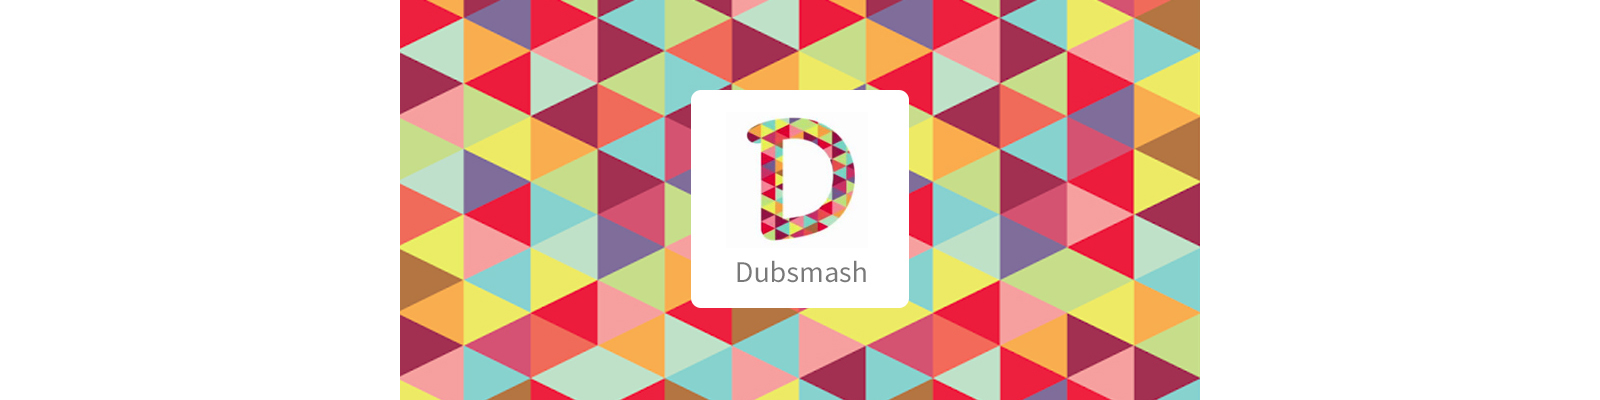 dubsmash app development